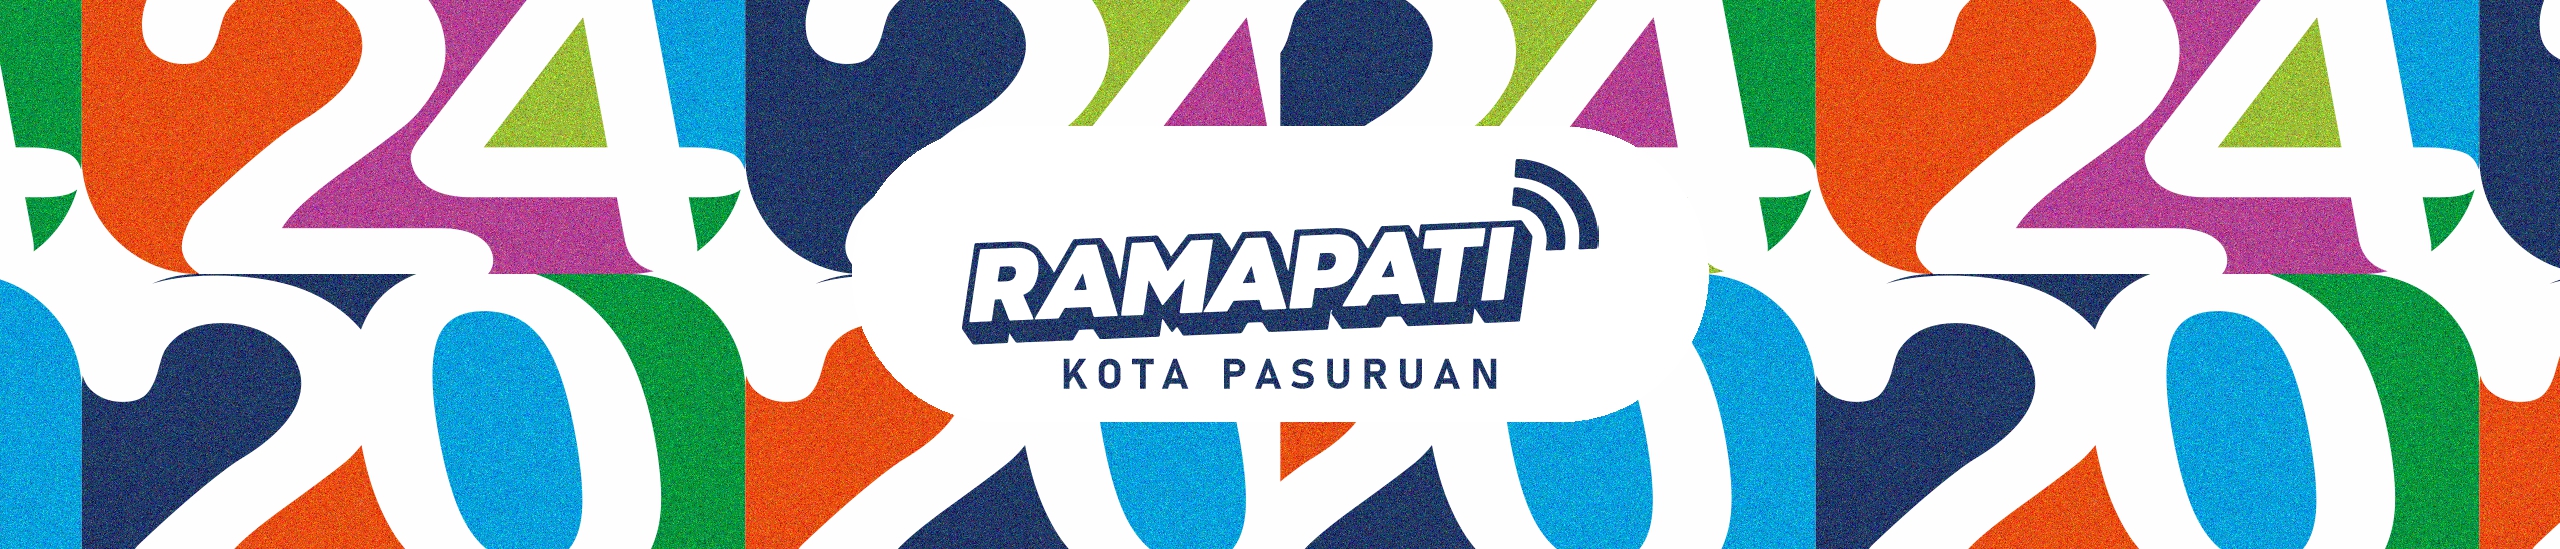 Ramapati FM  Kota Pasuruan